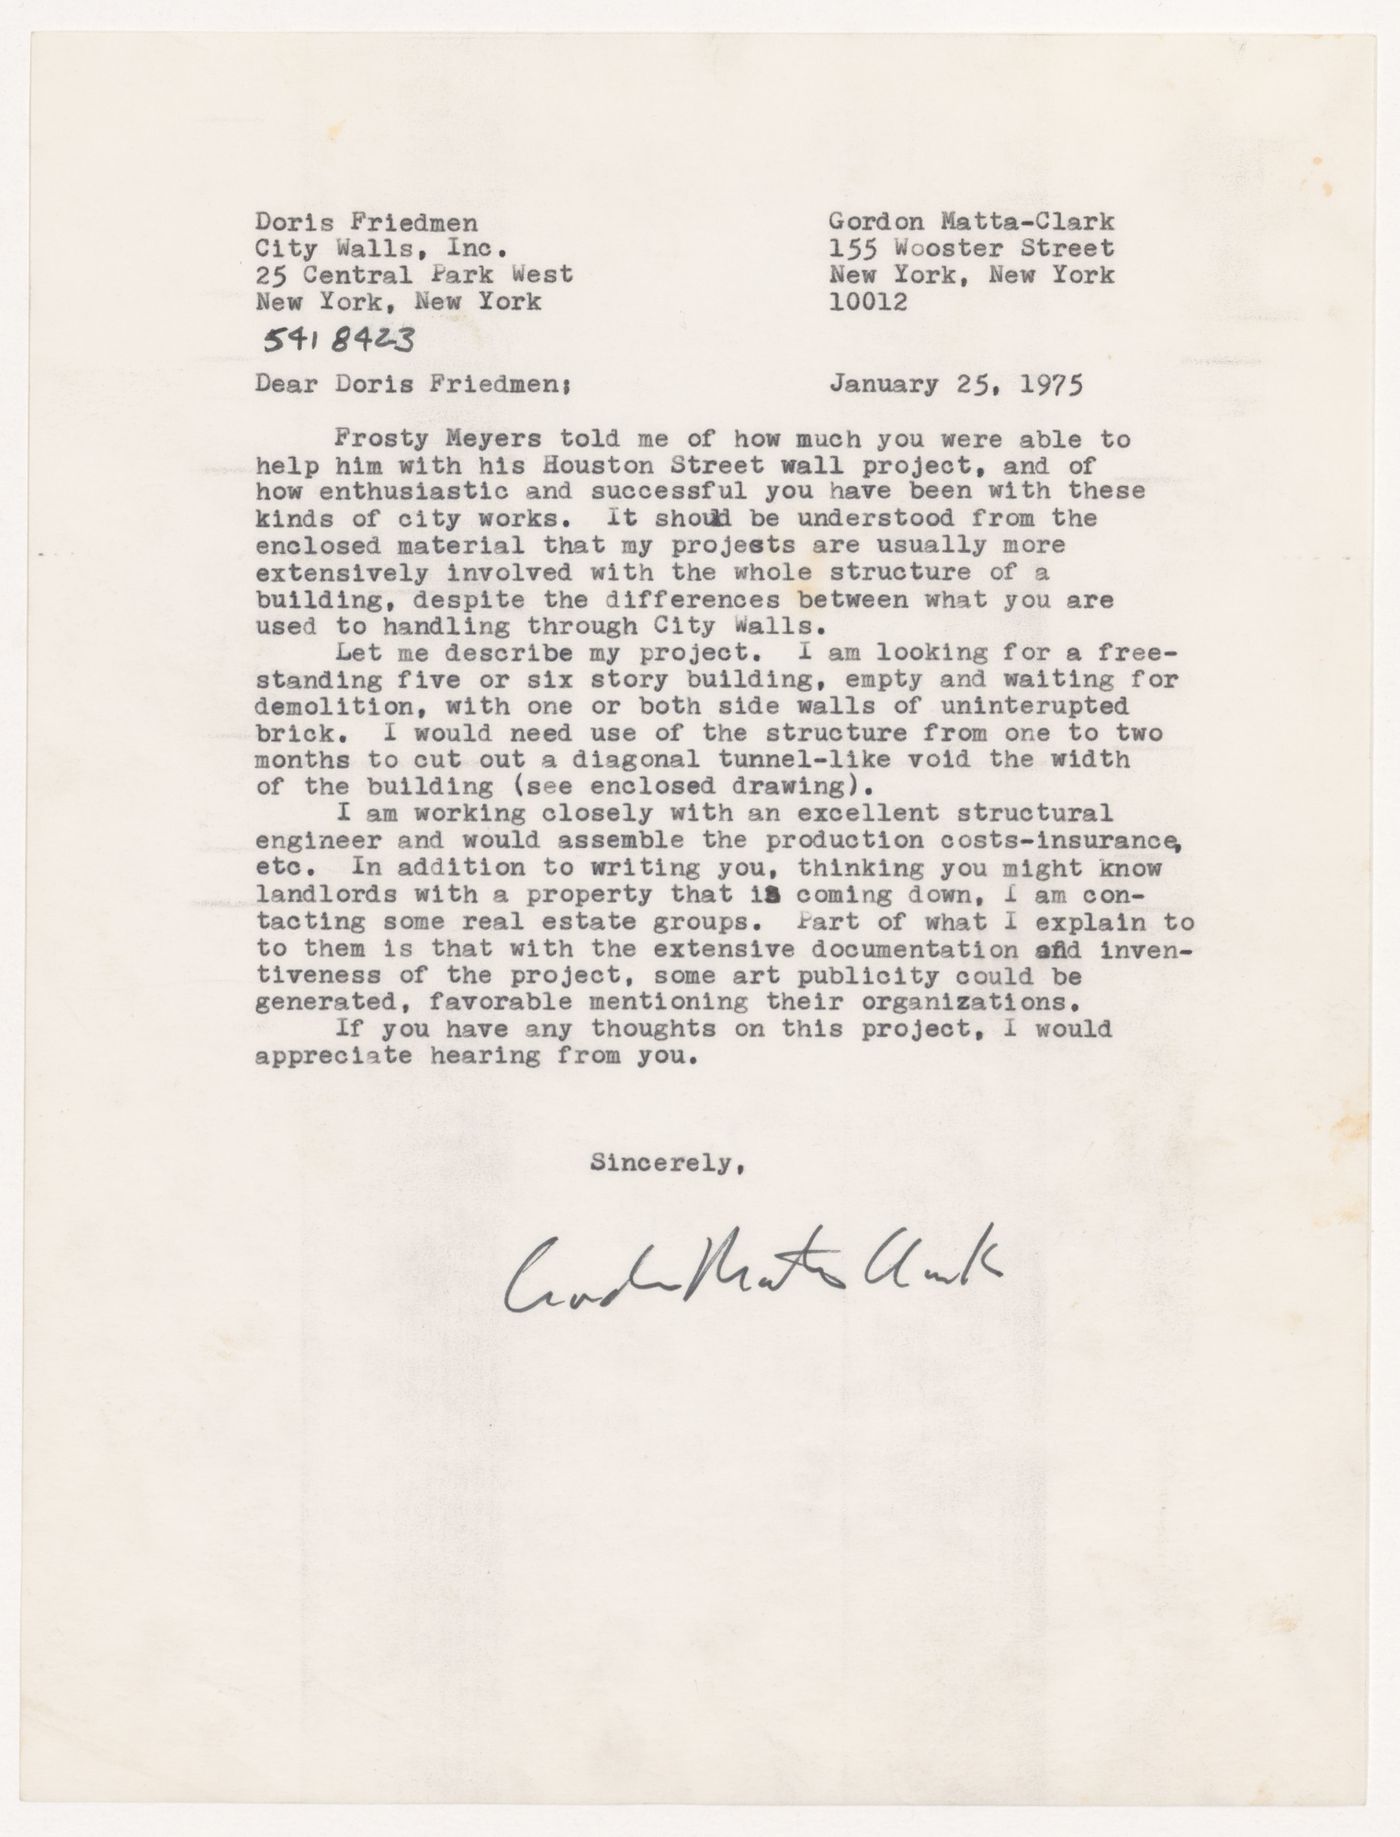 Letter from Gordon Matta-Clark to Doris Friedmen